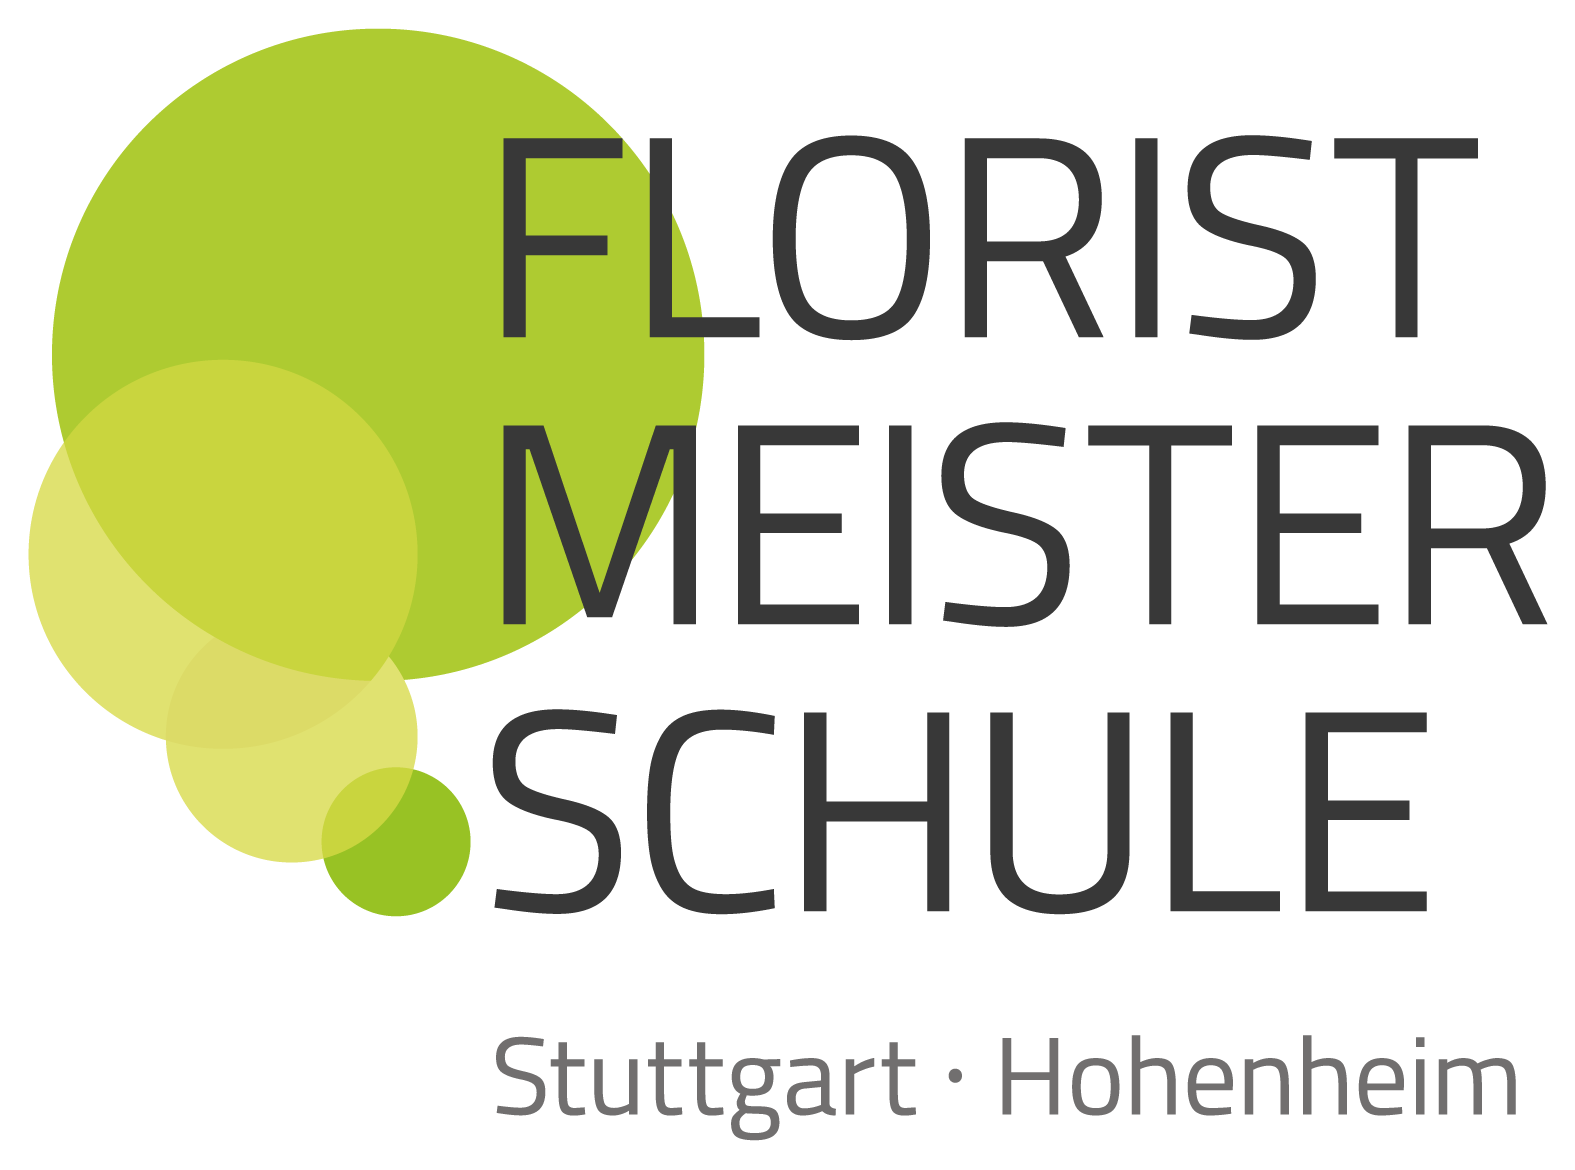 Florist Meister Schule Stuttgart